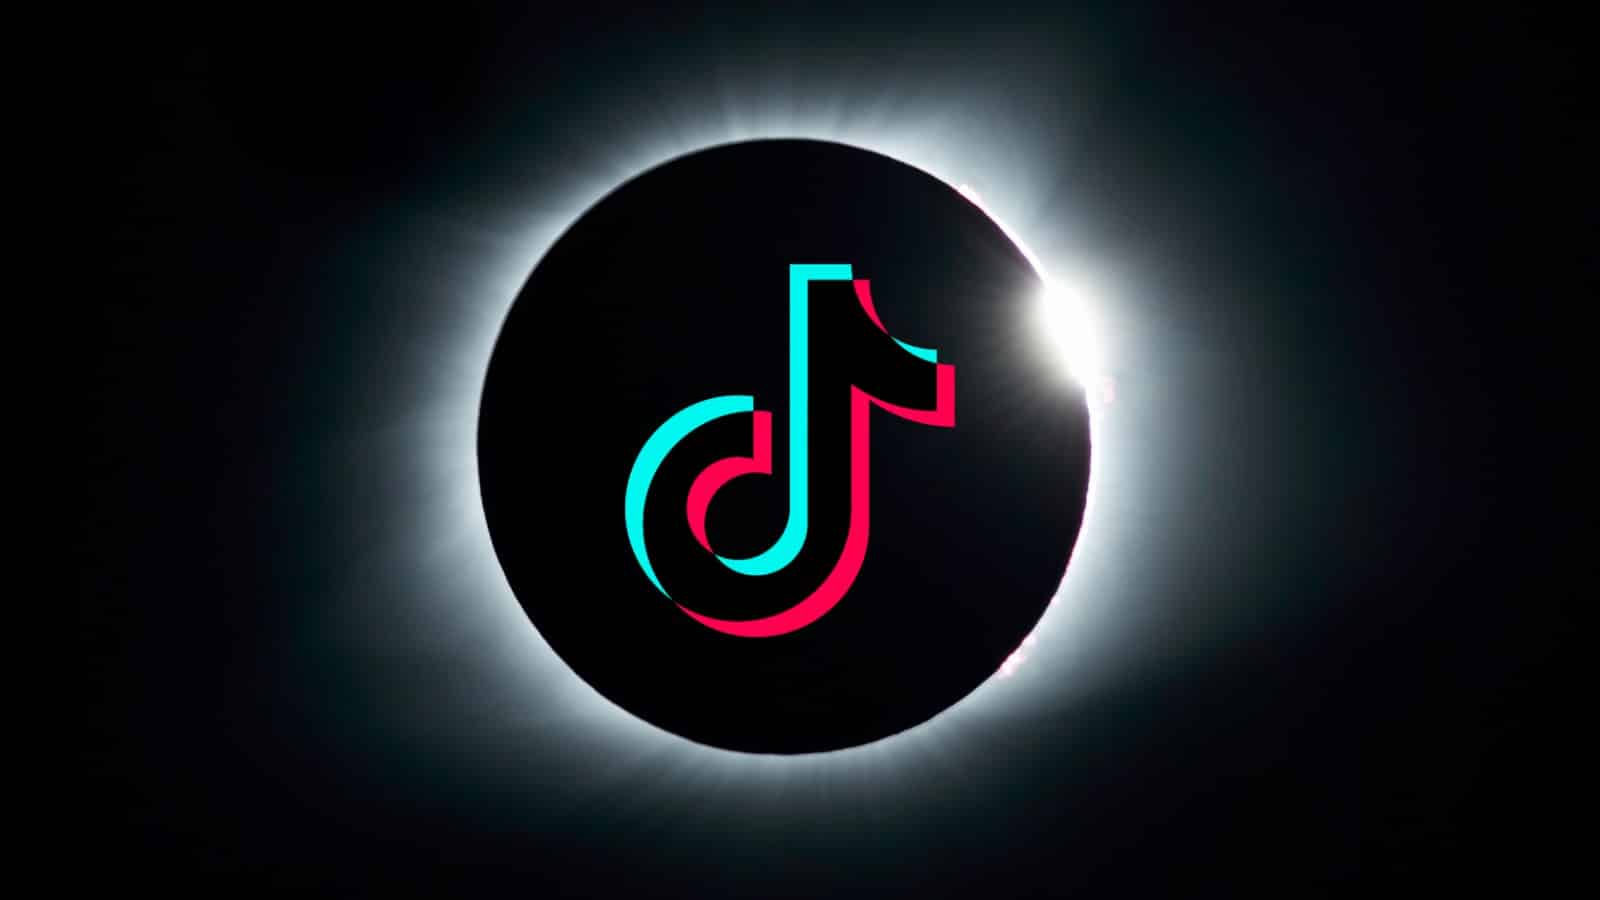 TikTok logo in front of an eclipse